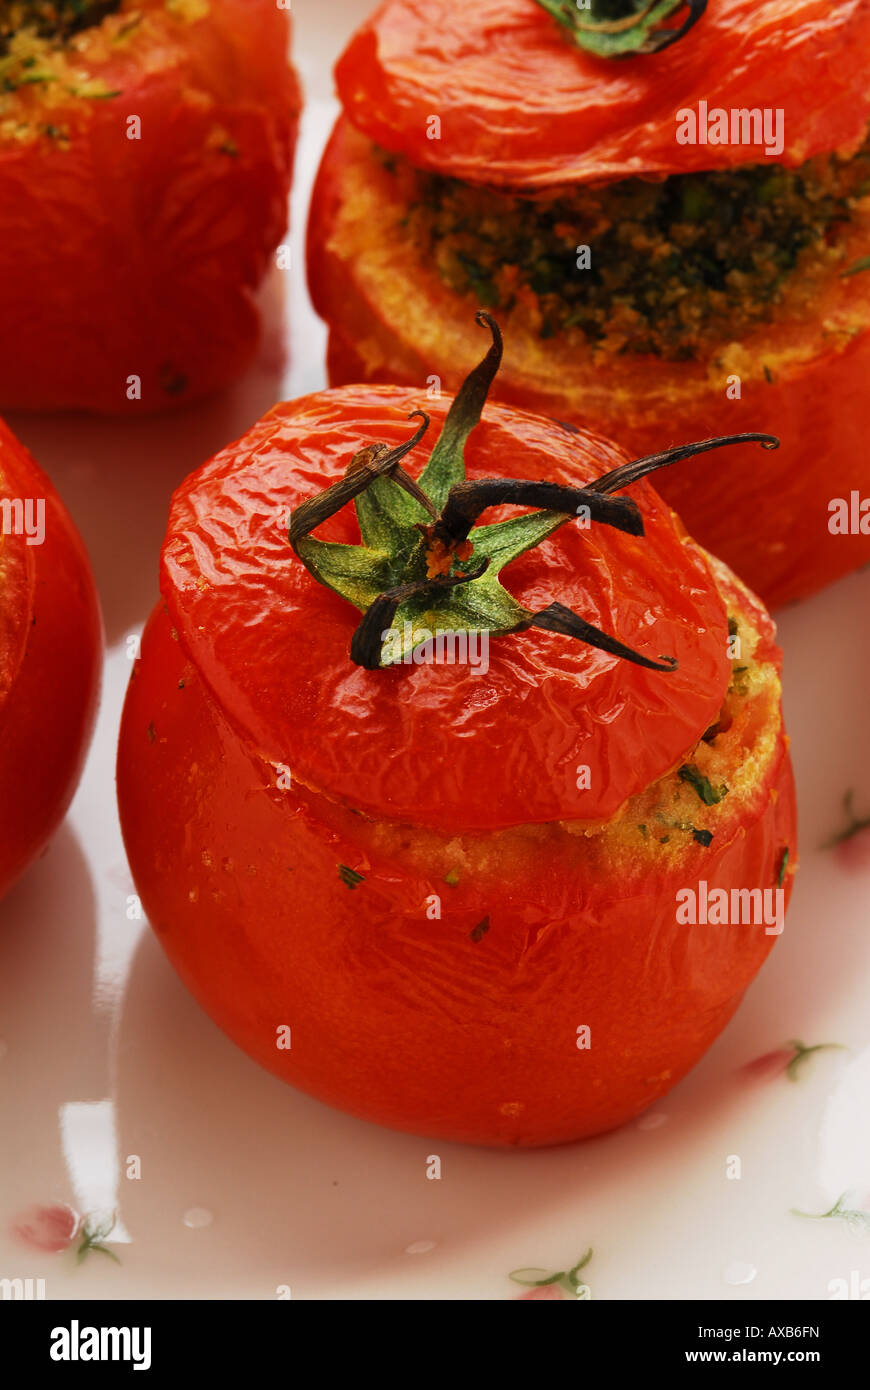 Stuffed tomatoes - Emilia Romagna Italian kitchen Stock Photo